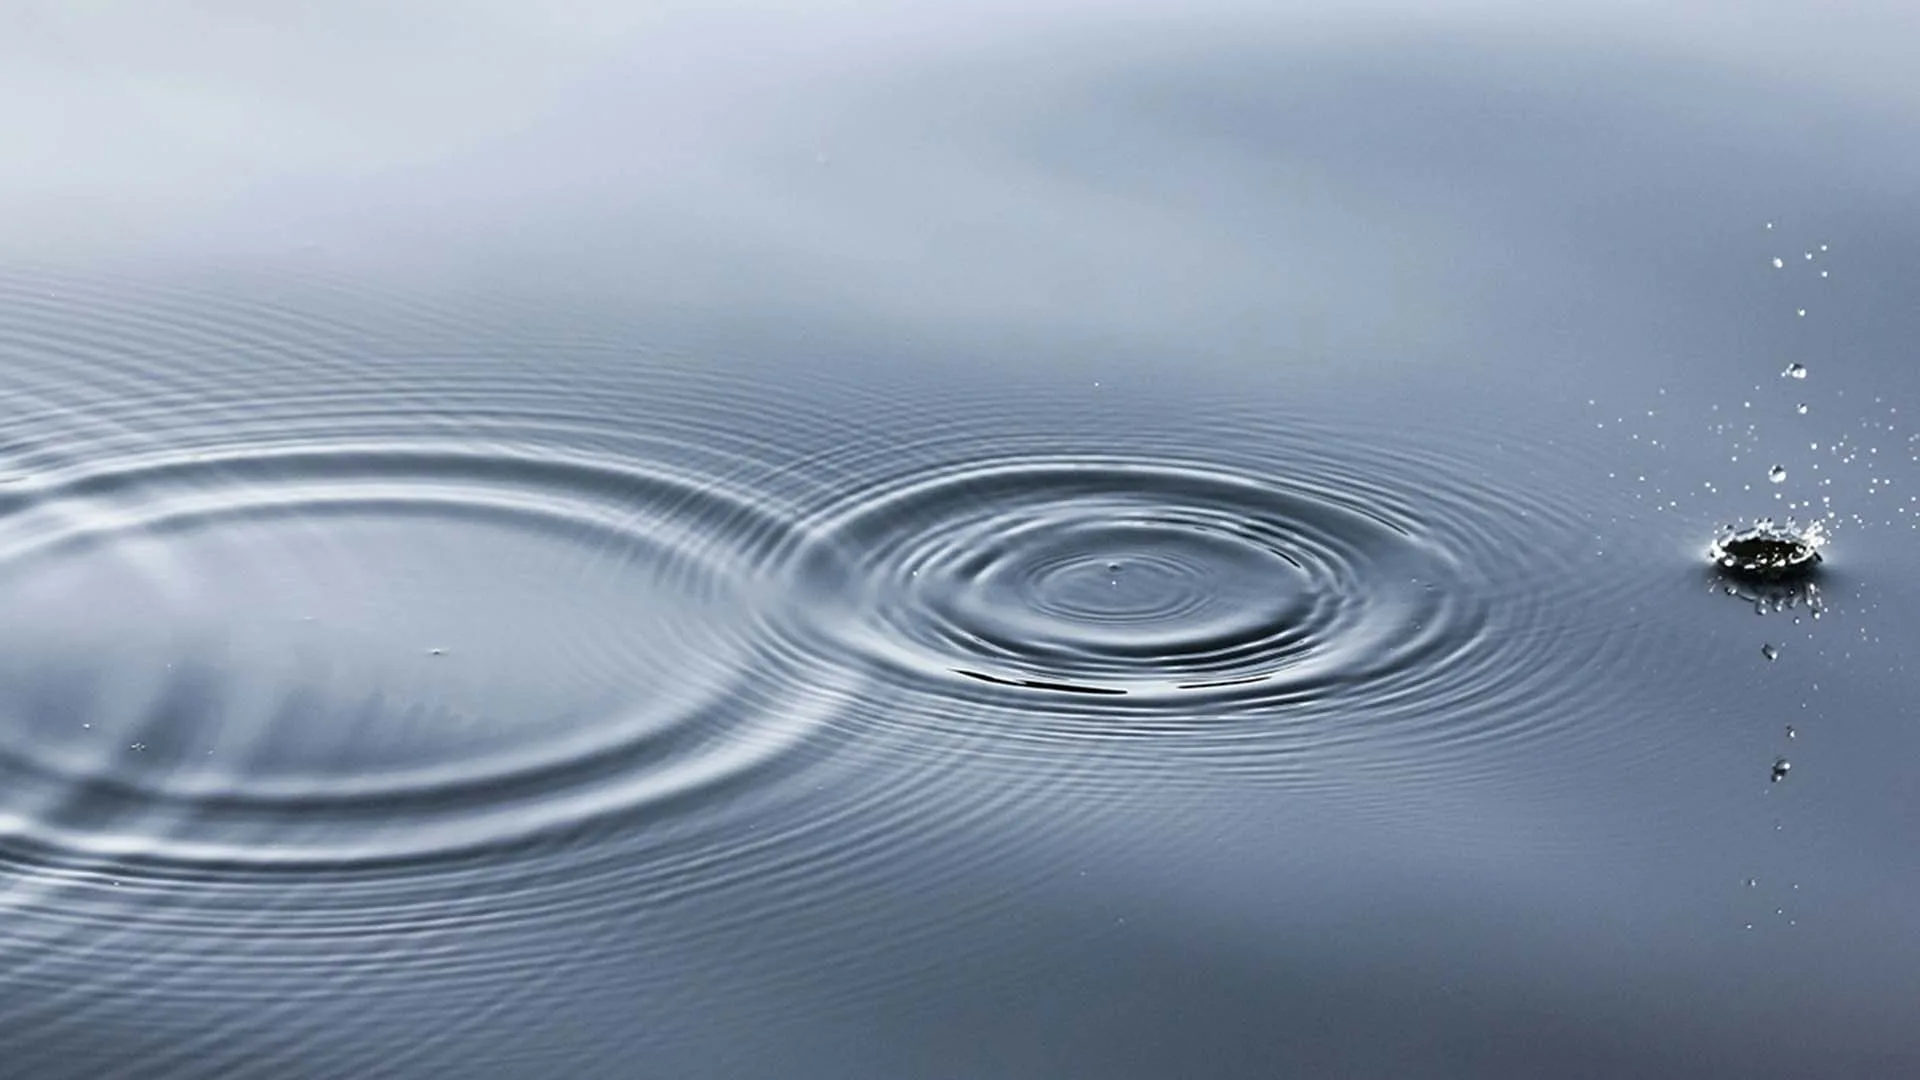 Drop of water rippling